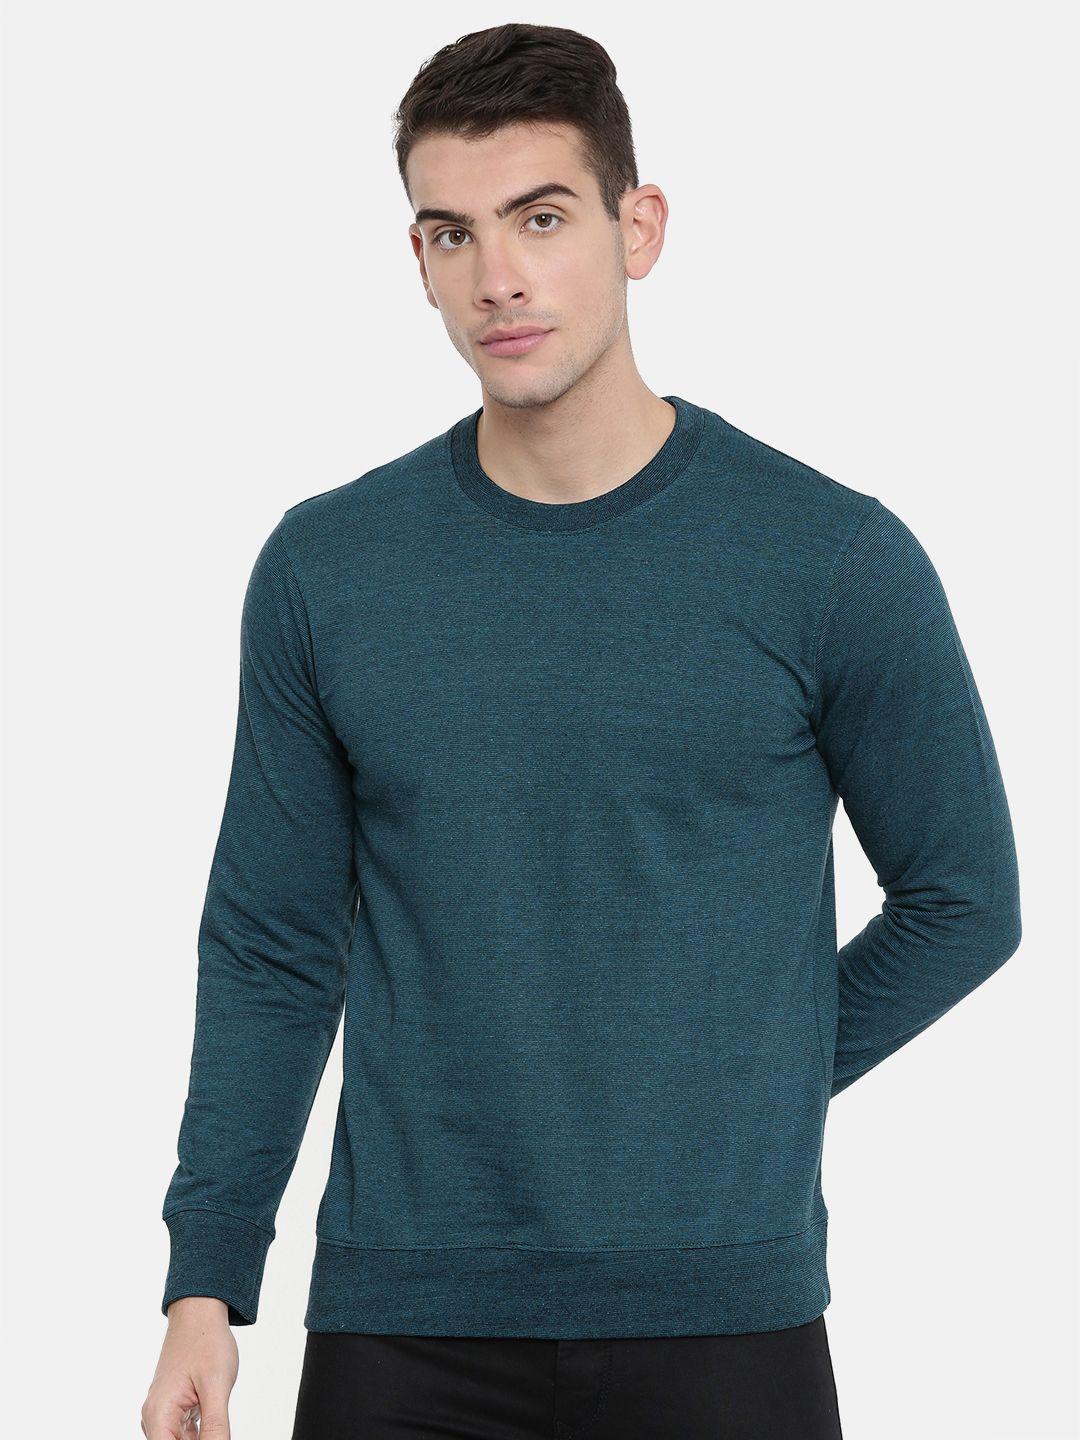 arise-men-teal-blue-solid-sweatshirt